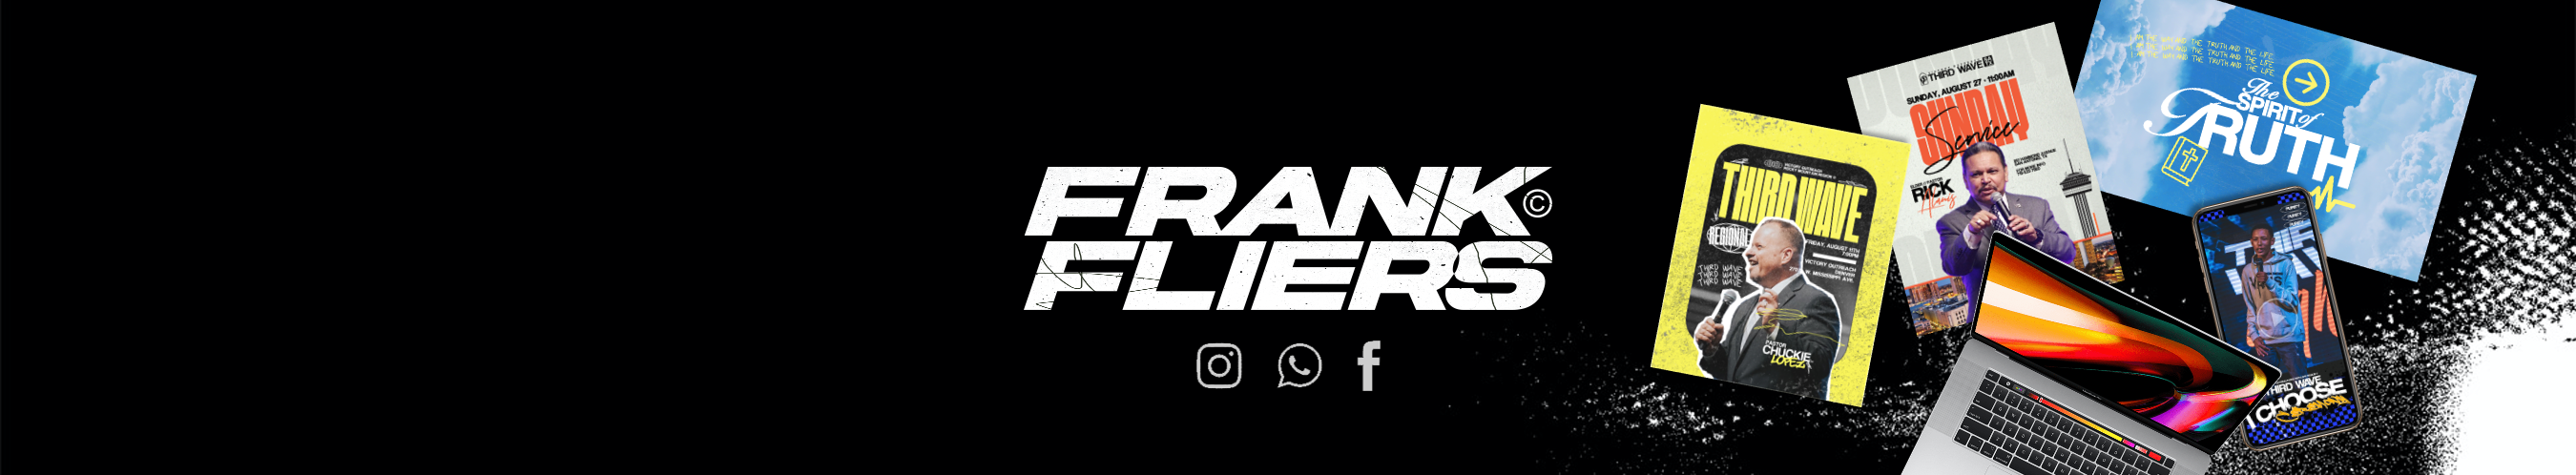 Frankie Gallegos's profile banner